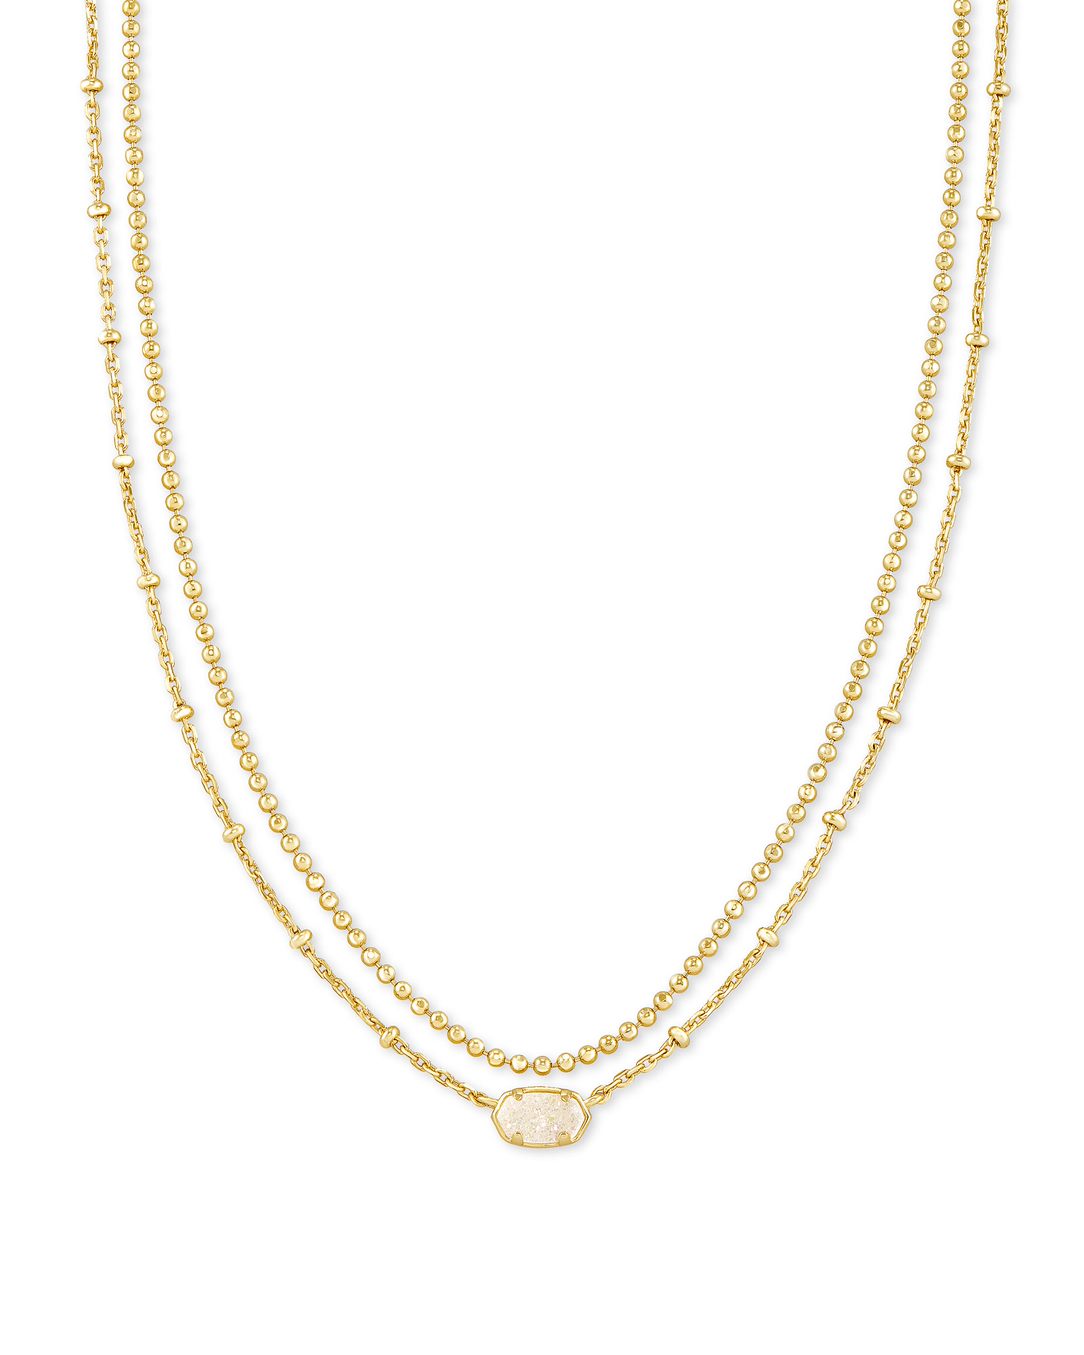 Kendra Scott Emilie Multi Strand Necklace in Gold Iridscnt